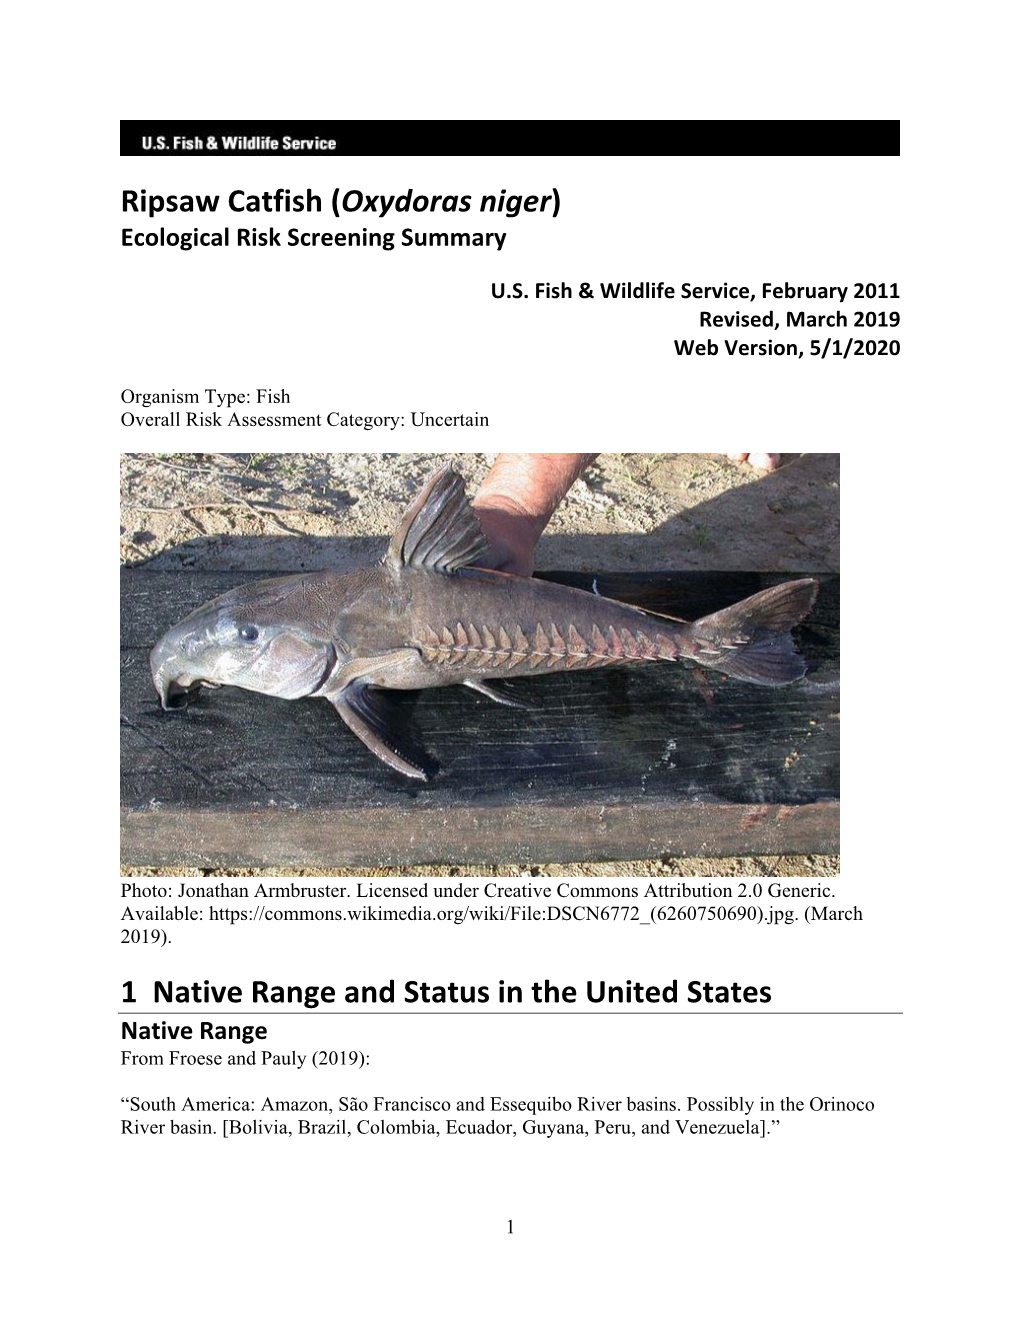 Ripsaw Catfish (Oxydoras Niger) Ecological Risk Screening Summary